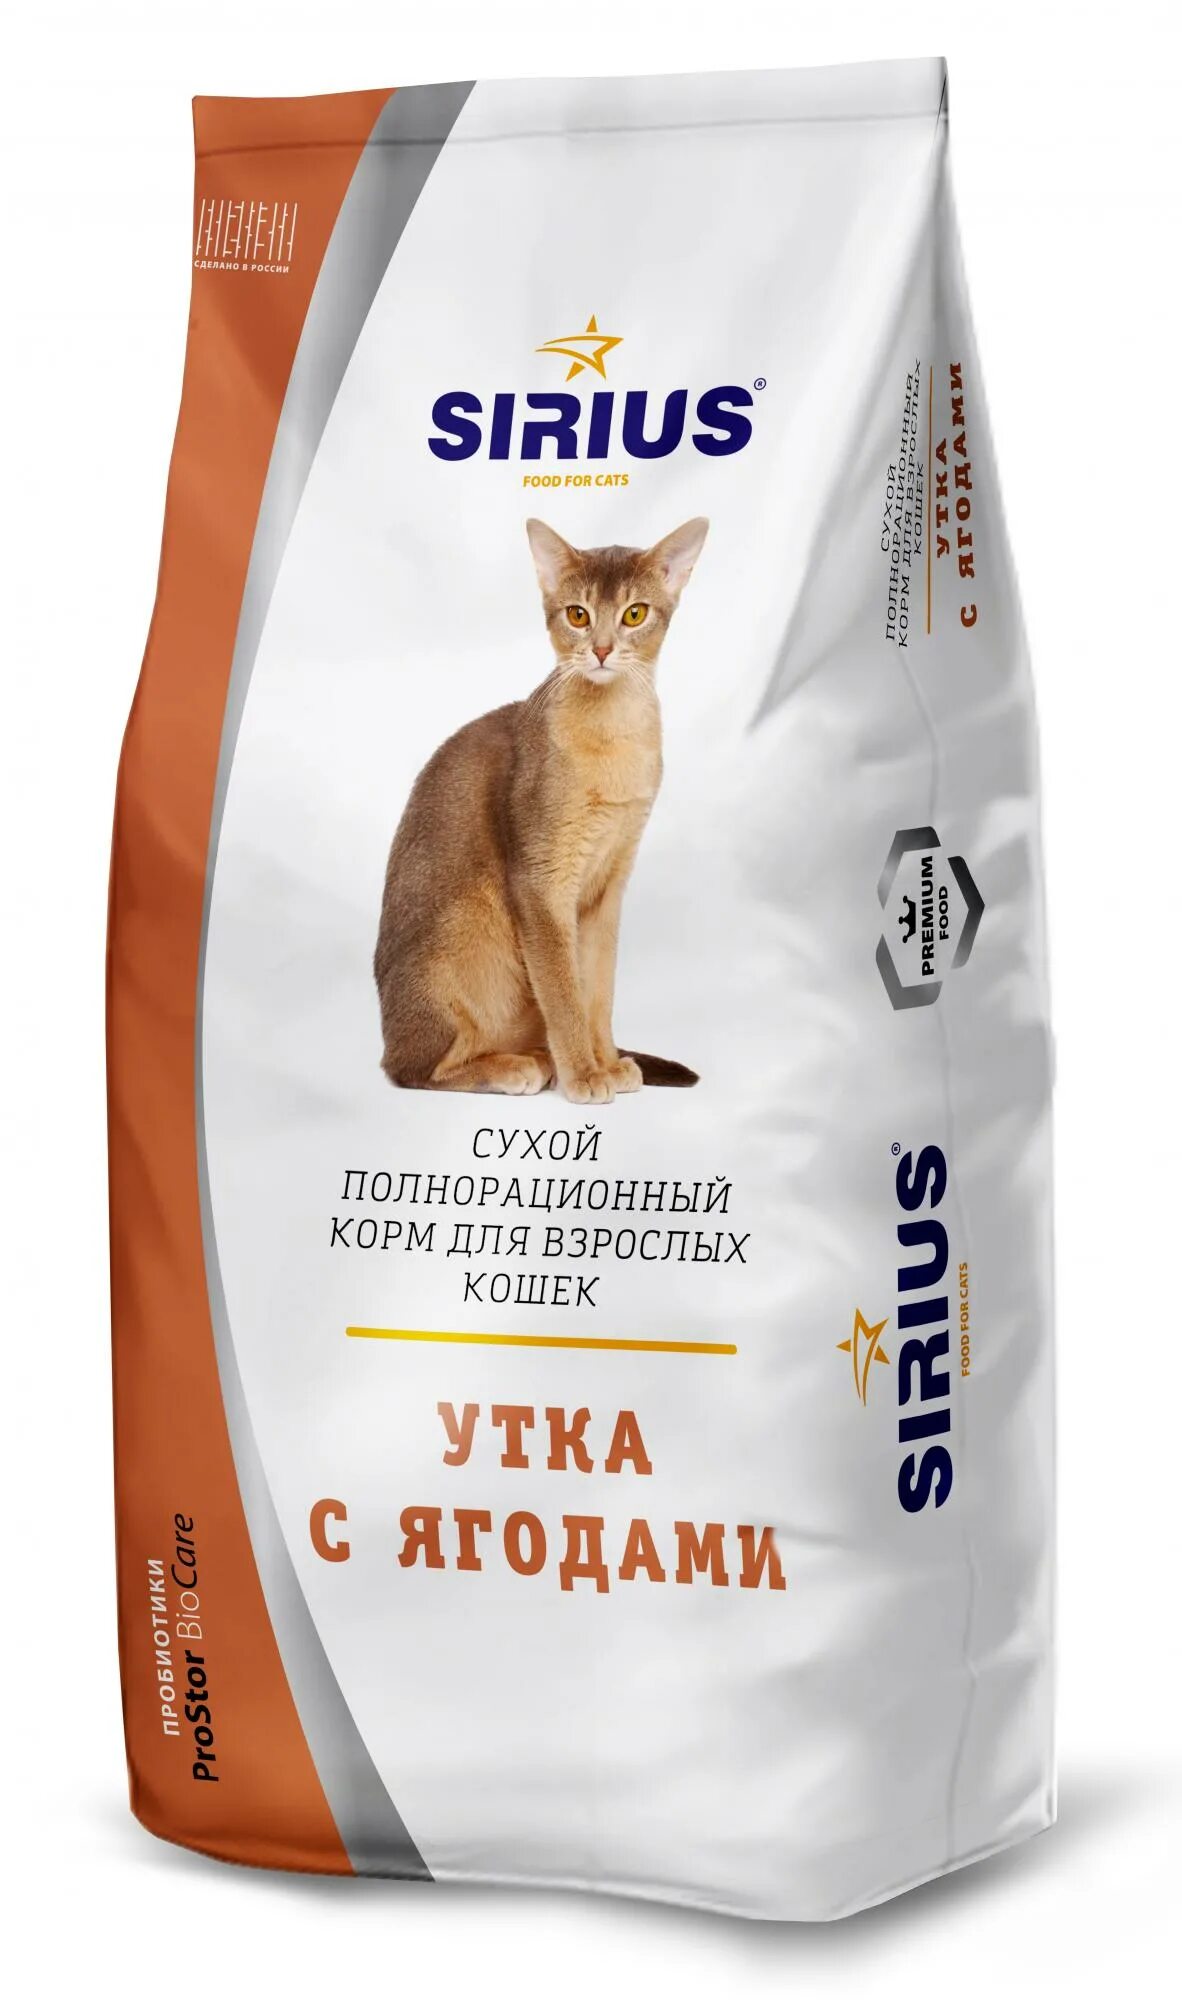 Купить корм премиум класса. Корм Сириус для кошек лосось и рис. Корм для кошек Sirius лосось и рис для взрослых кошек 10 кг. Сириус корм для кошек 10 кг. Sirius Platinum корм.